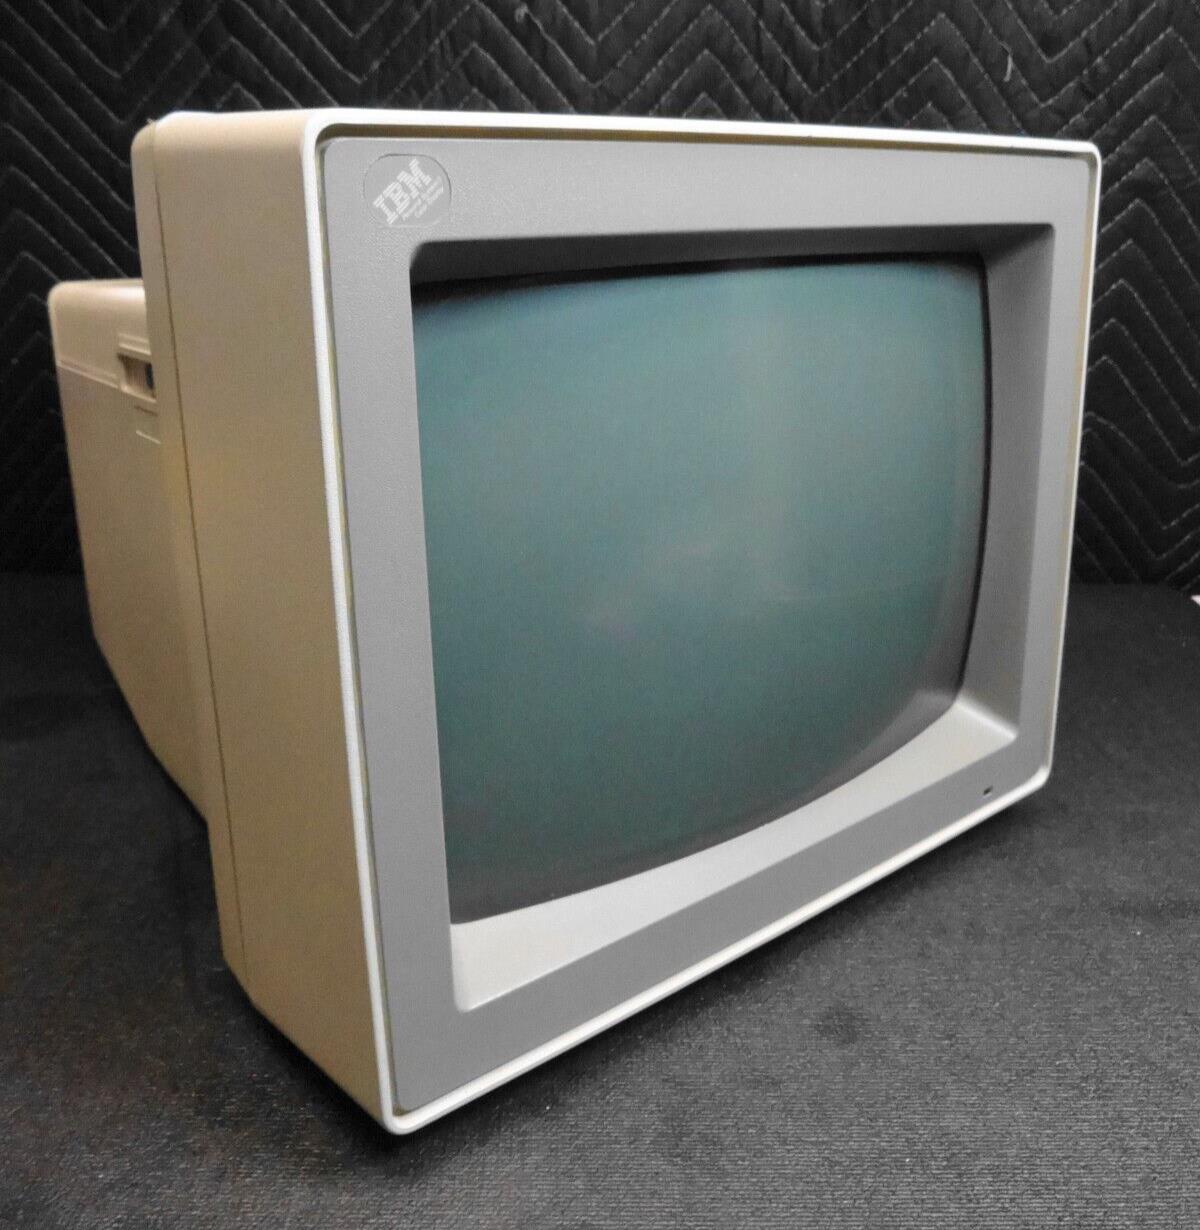 IBM PS/2 8512-001 VGA/XGA 14" Color CRT Monitor for Vintage IBM PC Computer